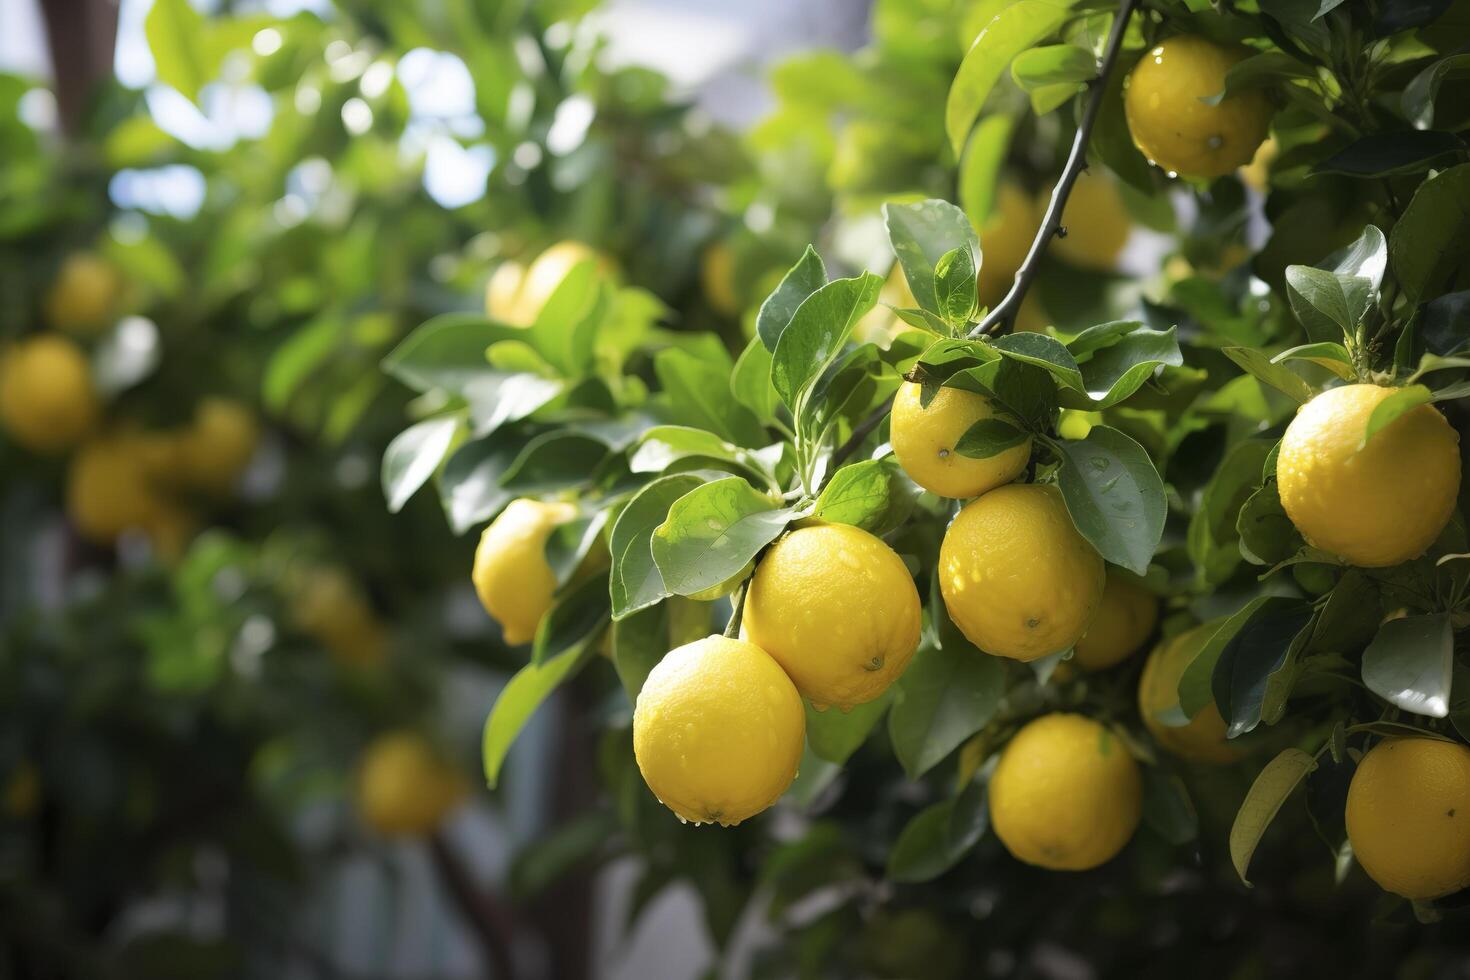 Lemon tree garden background created with technology photo